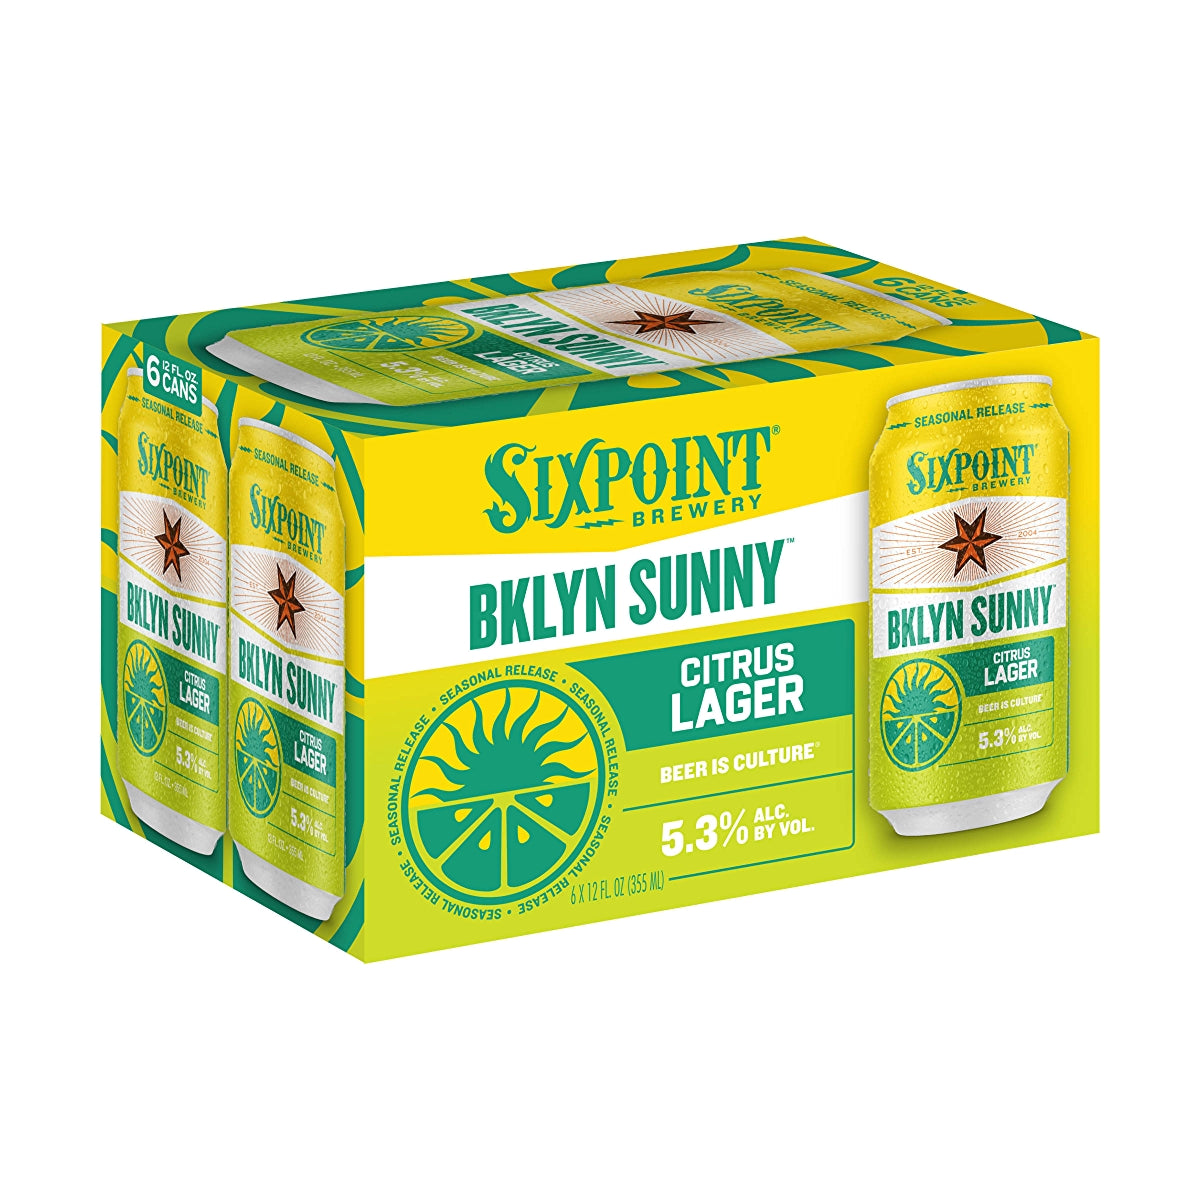 Sixpoint Bklyn Sunny 5.3% abv